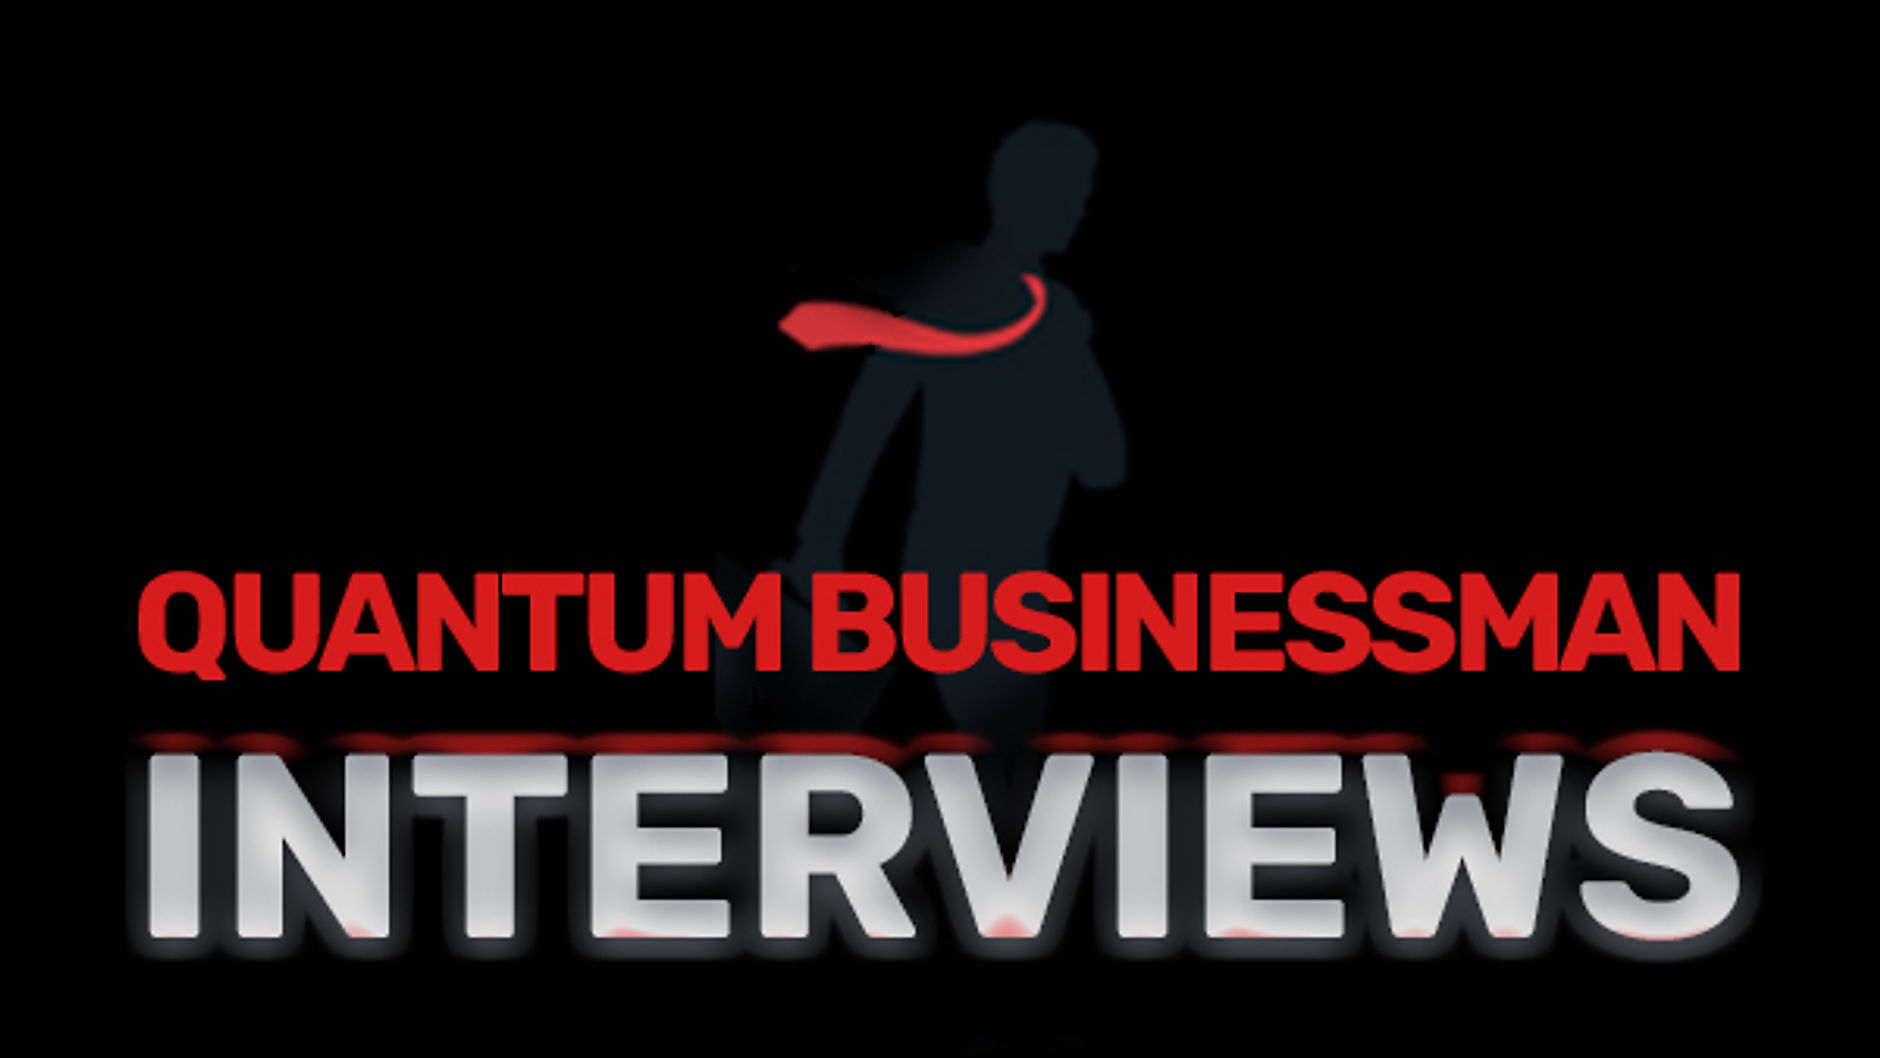 Quantum Businessman Interviews